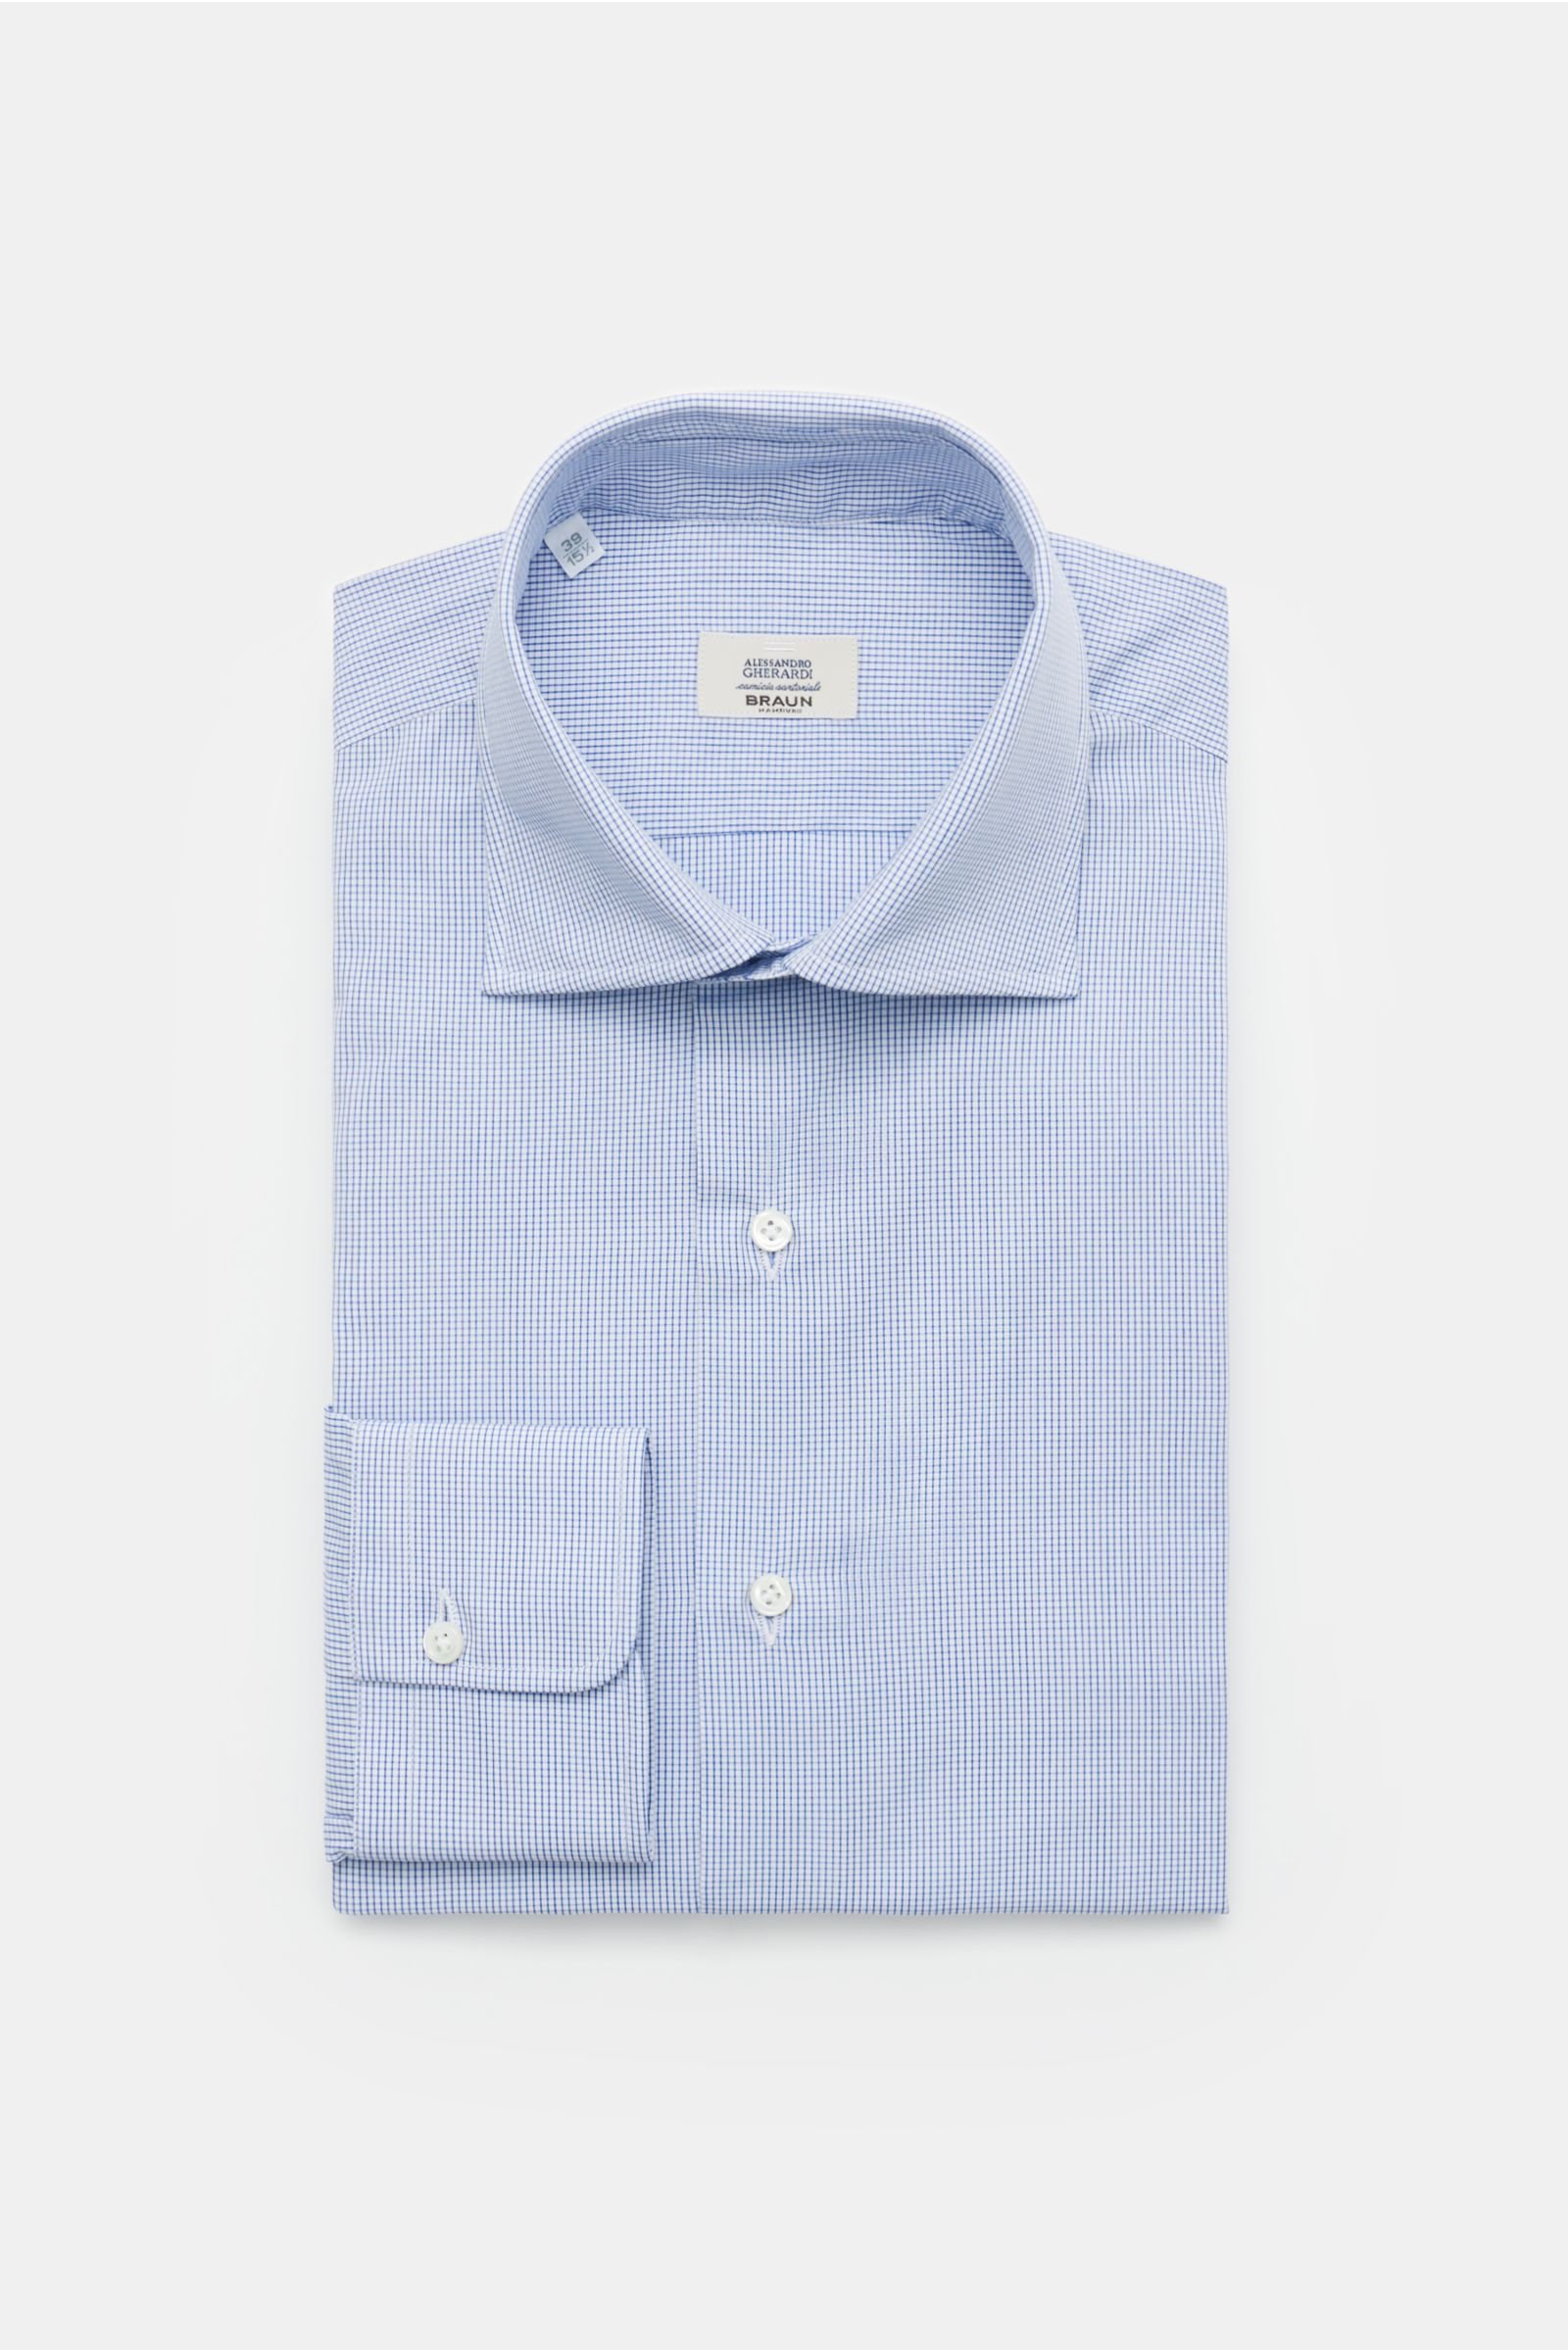 Business shirt shark collar dark blue/white checked